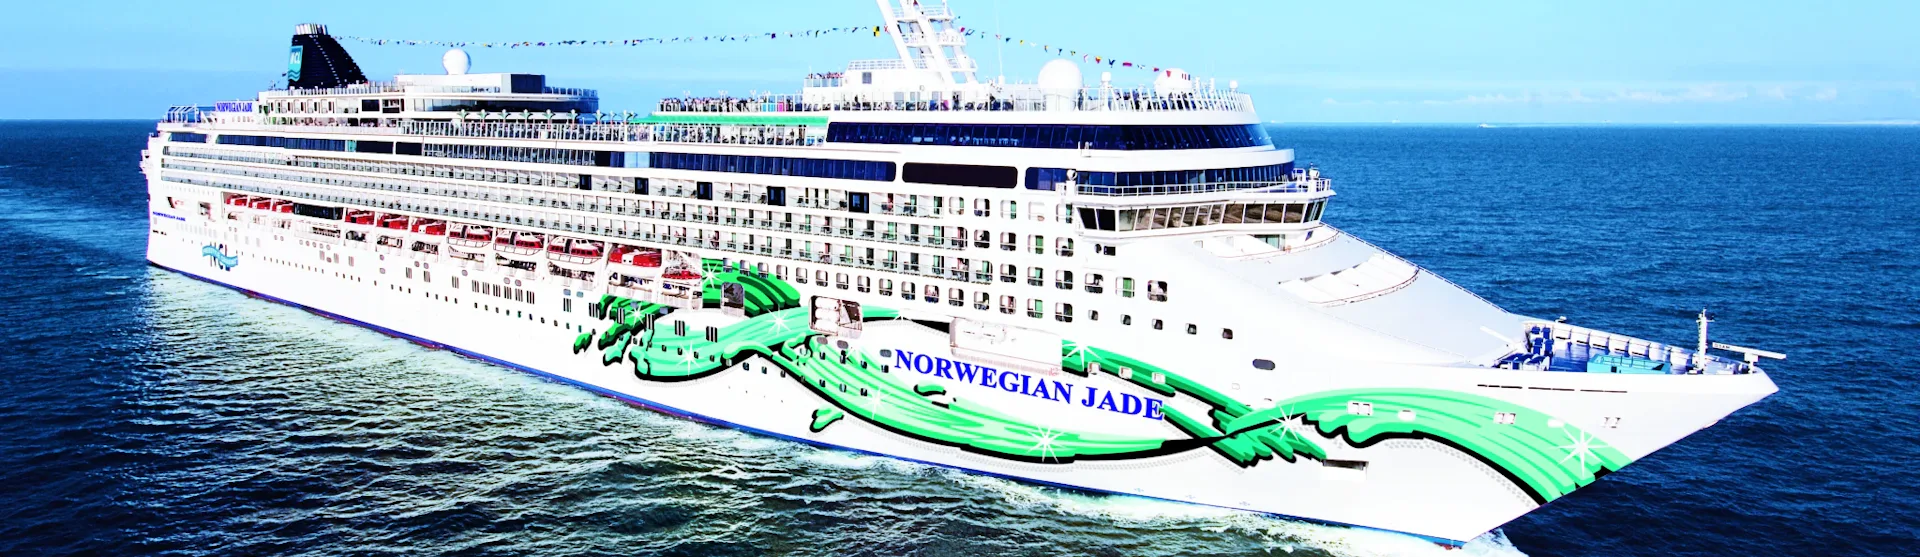 Norwegian Jade - Norwegian Cruise Line